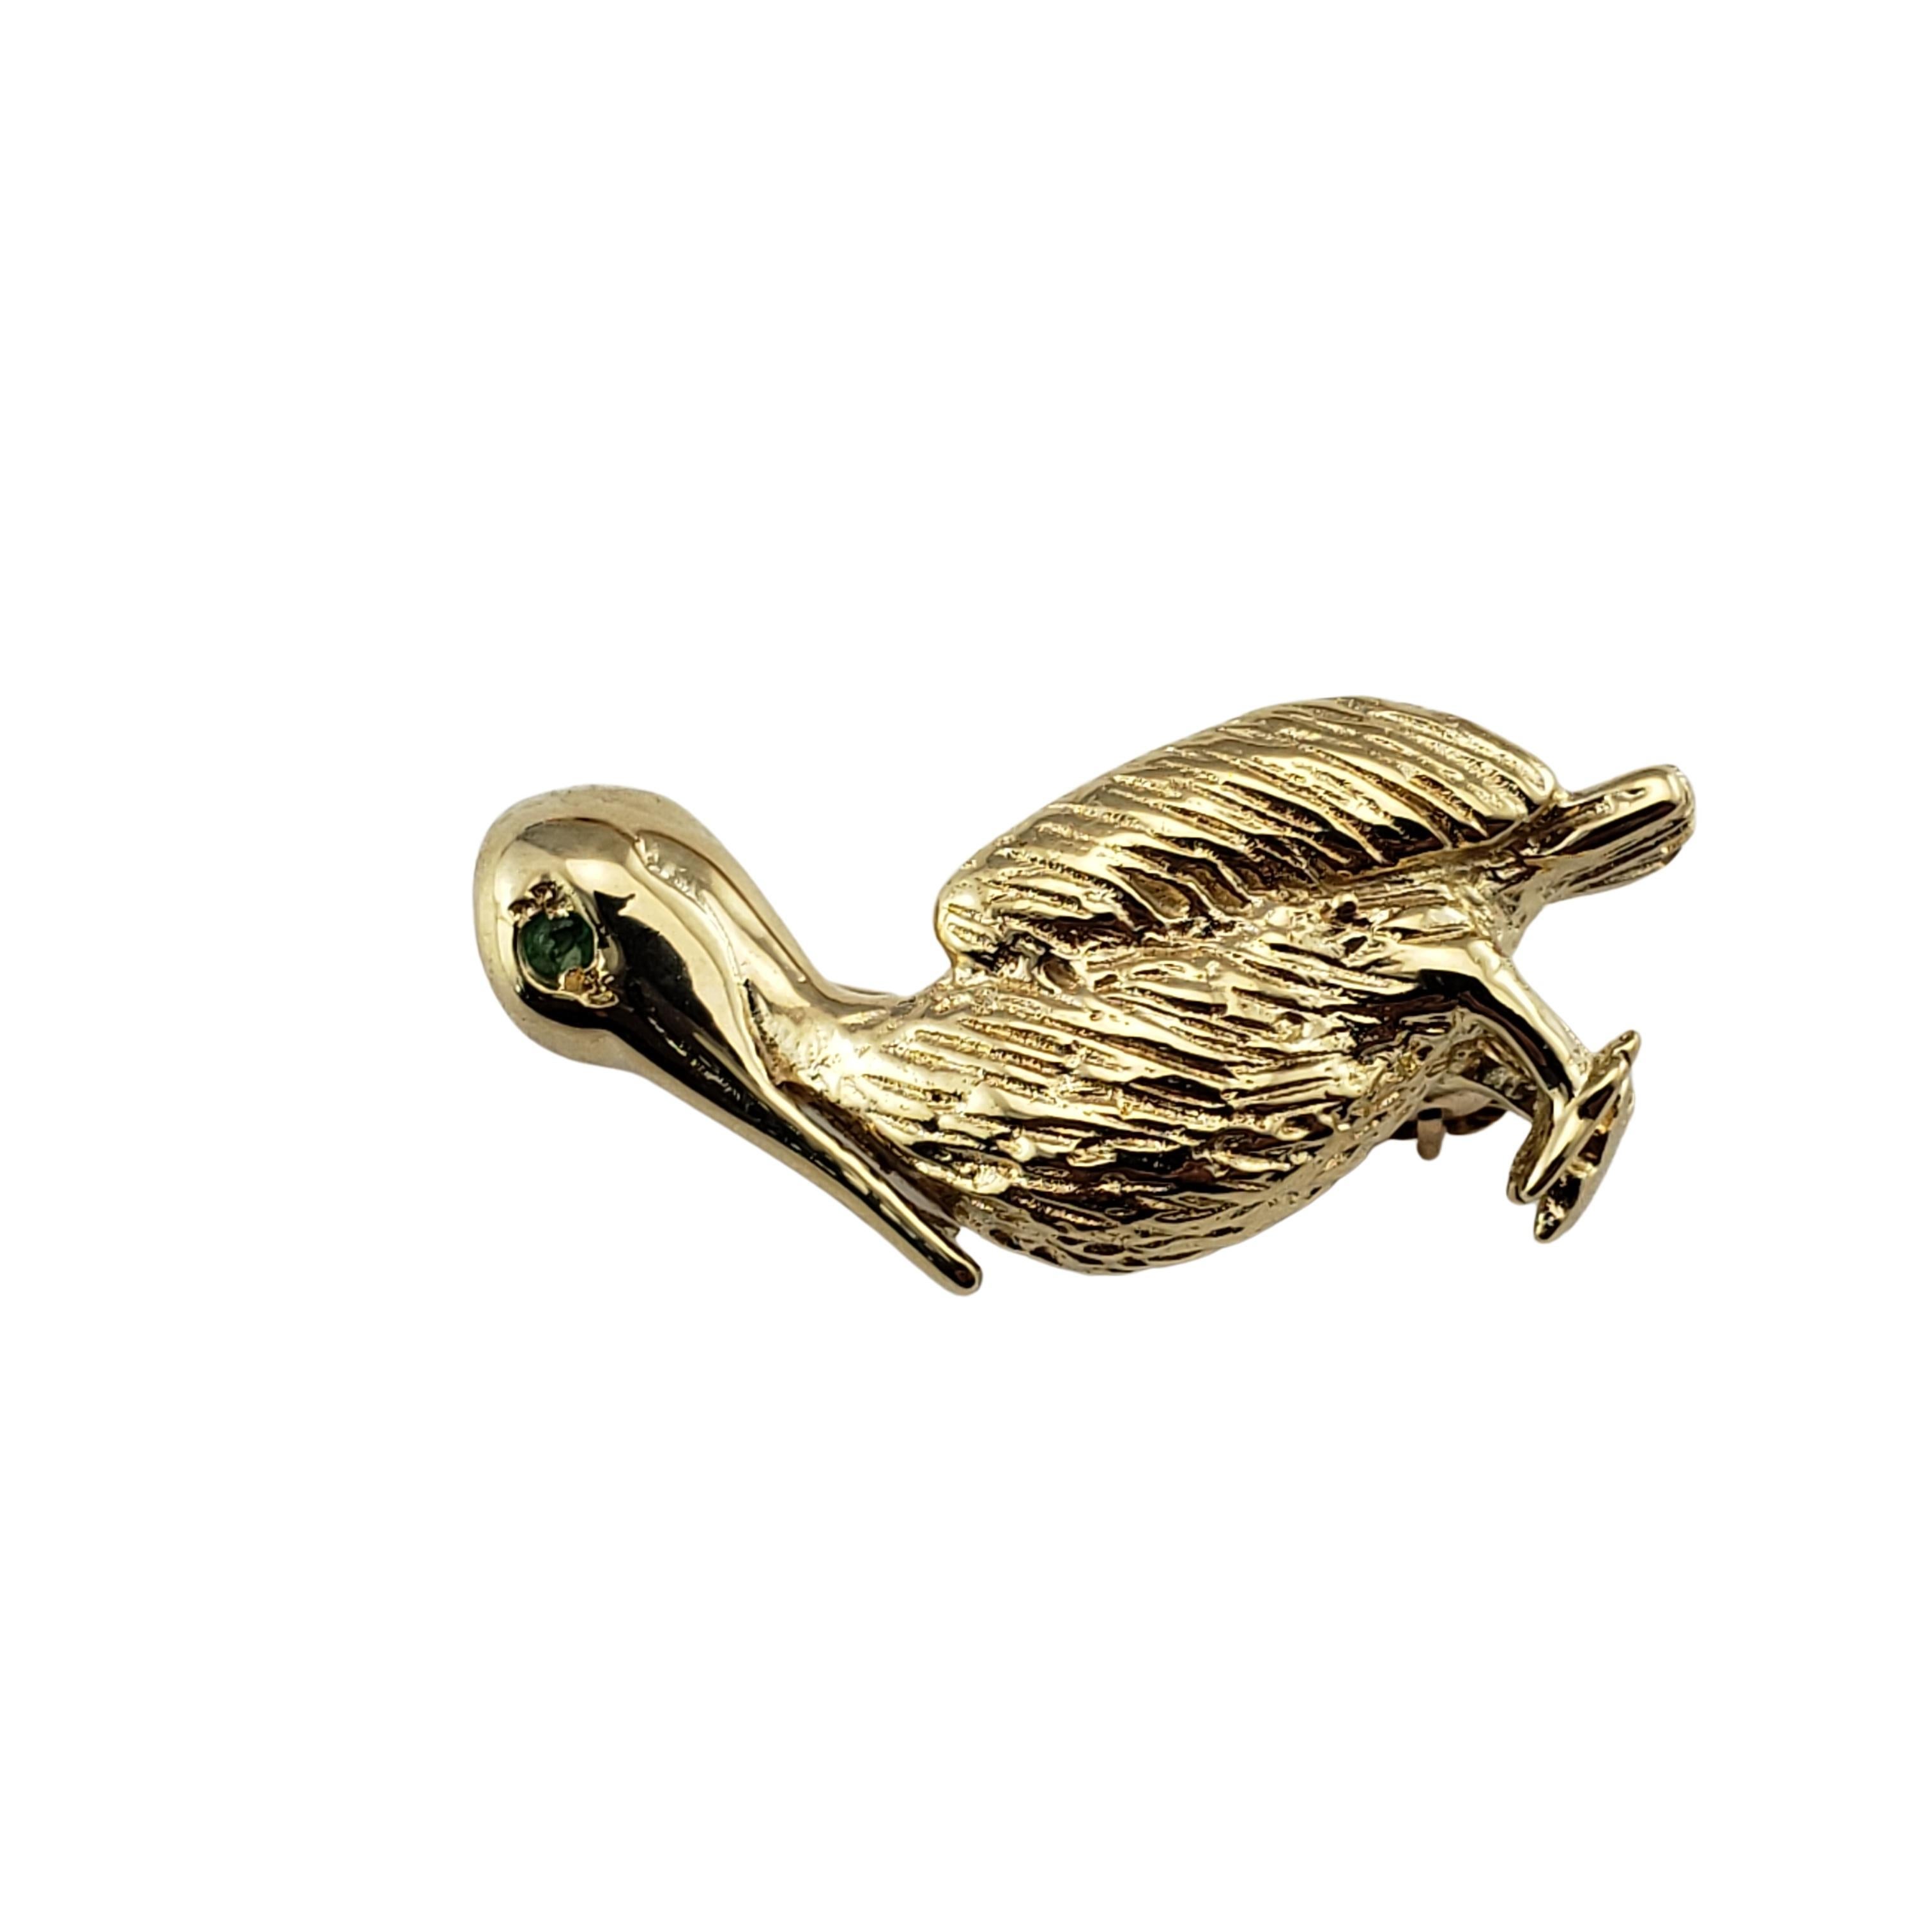 Unusual 1960s vintage pelican novelty brooch made in Soviet Russia